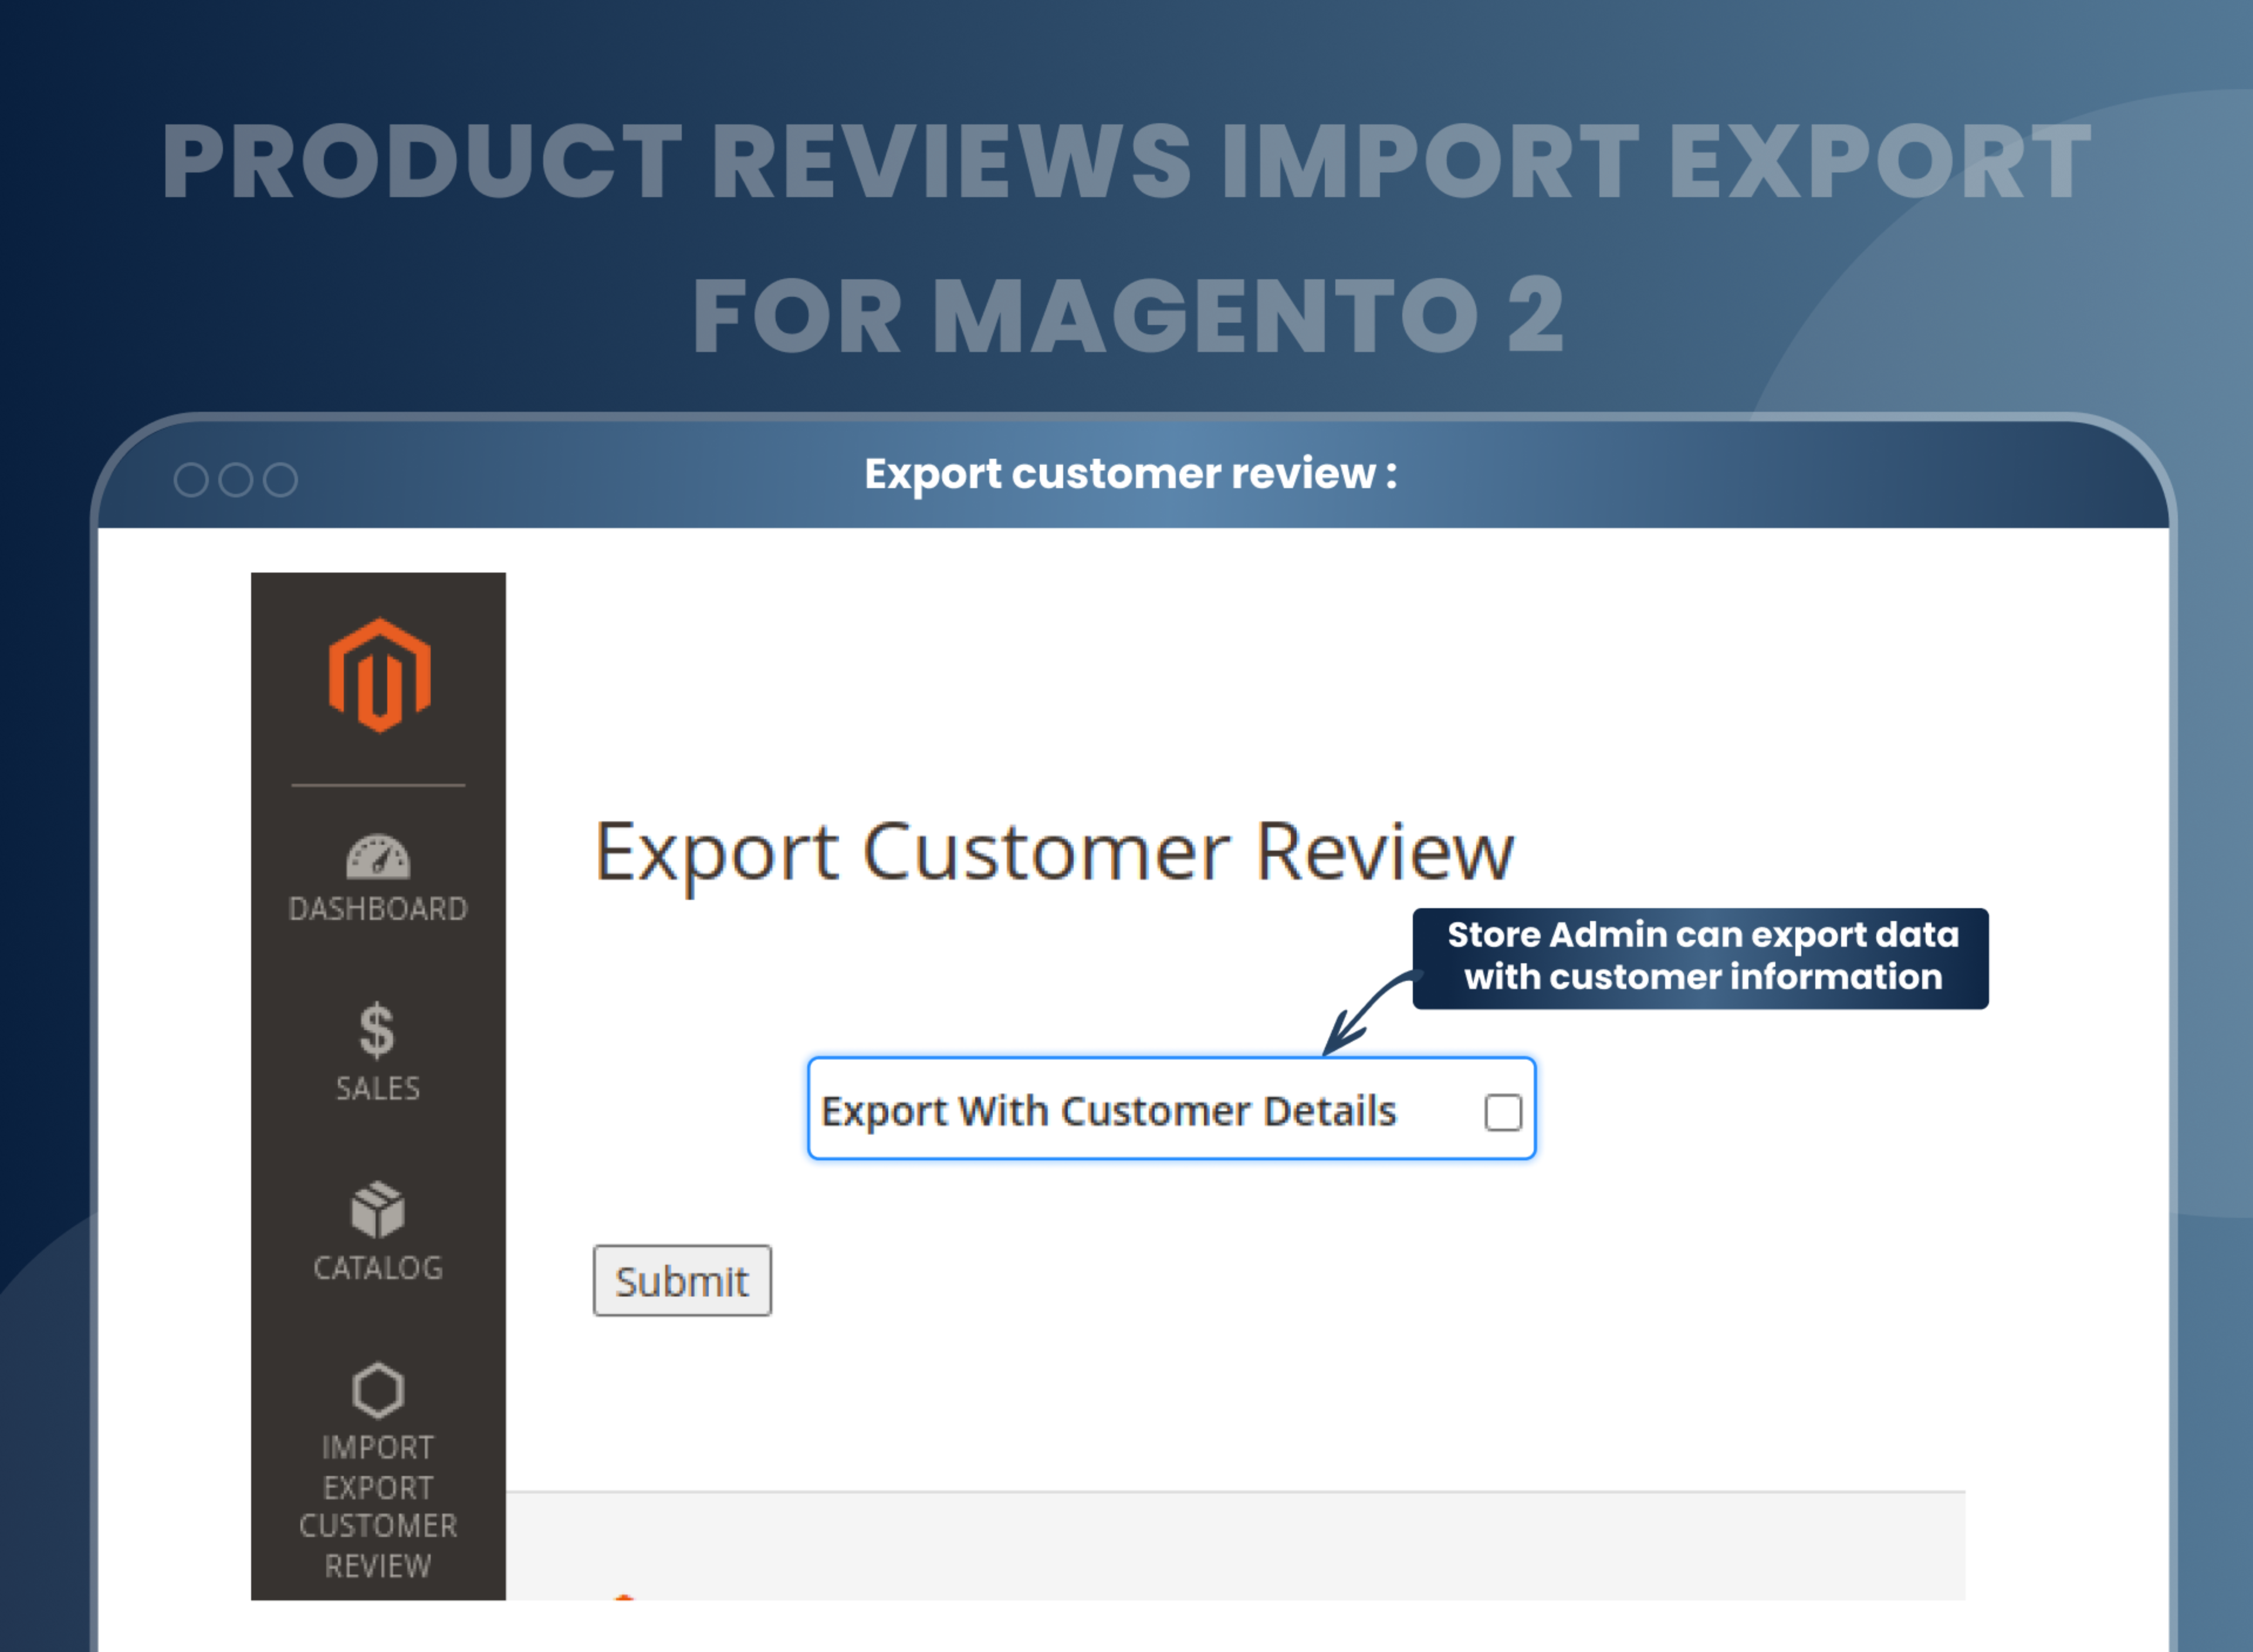 Export customer review